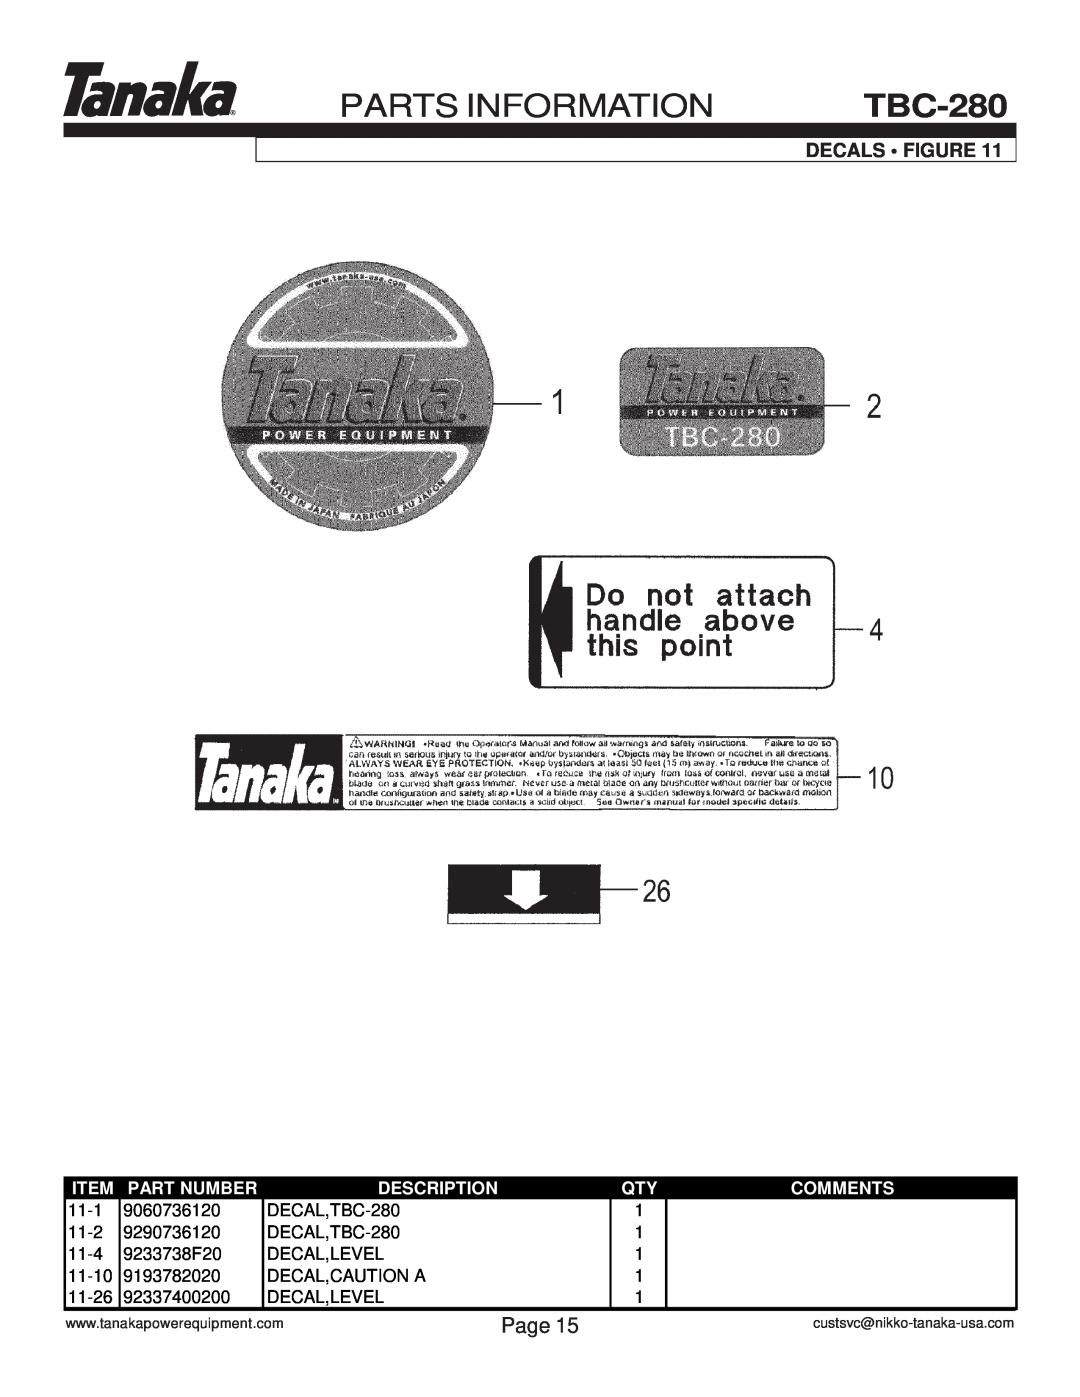 Tanaka TBC-280 manual Decals Figure, Parts Information, Page, Part Number, Description, Comments 